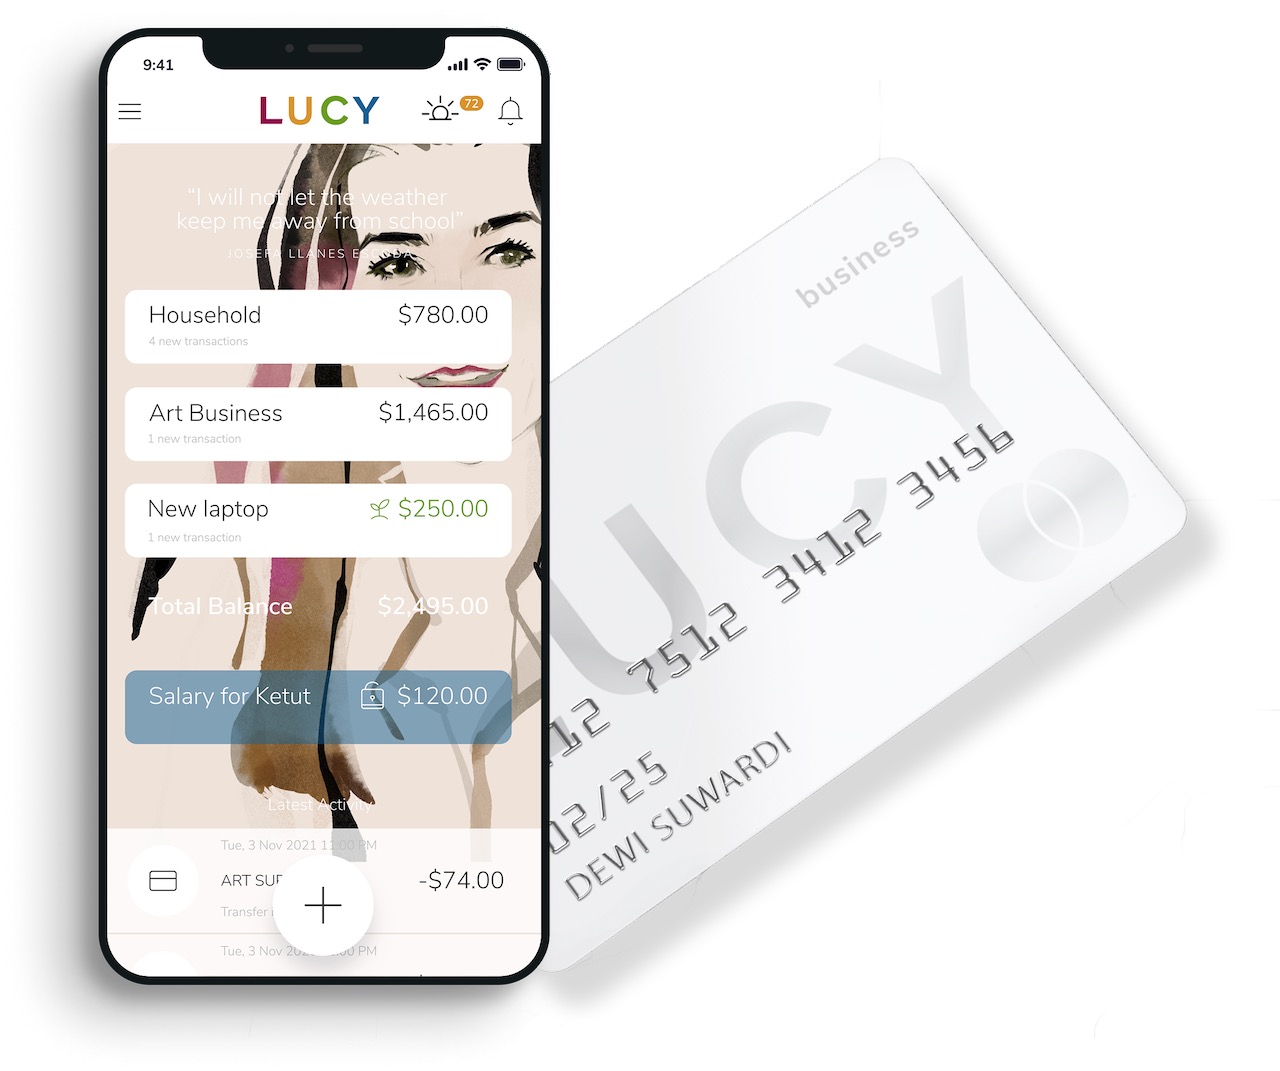 Meet Lucy – A New Digital Banking App for Women